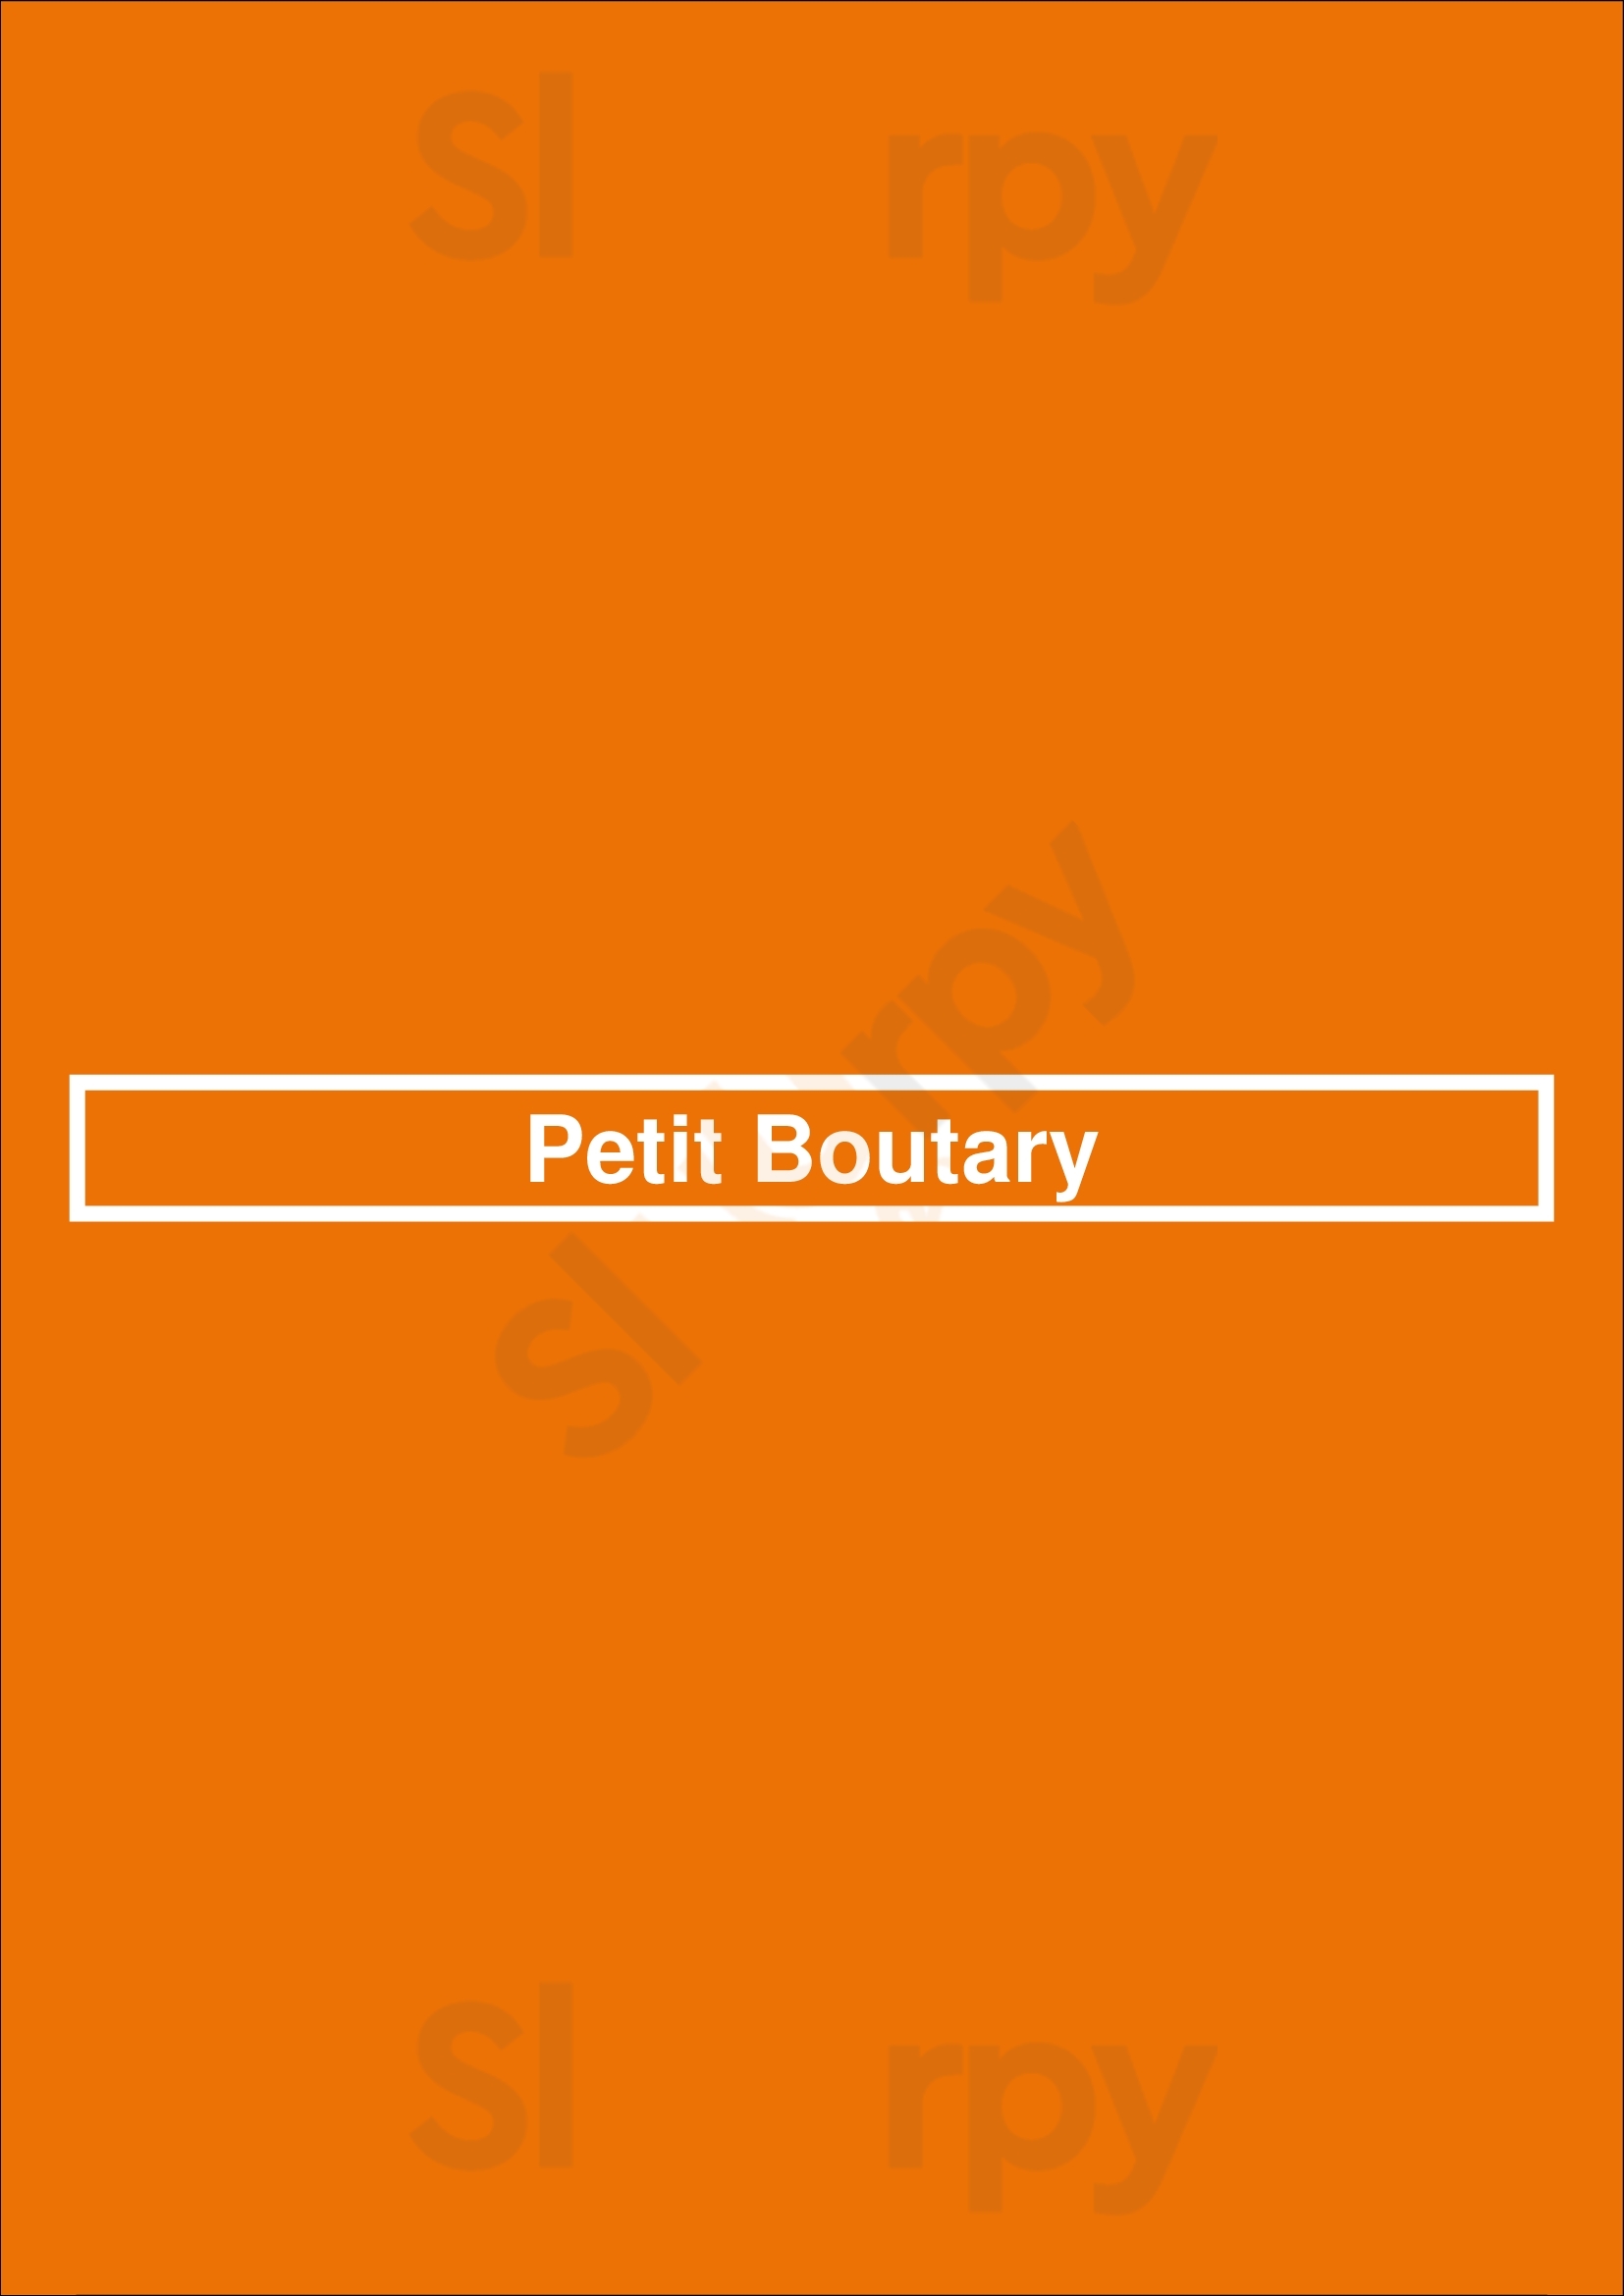 Petit Boutary Paris Menu - 1